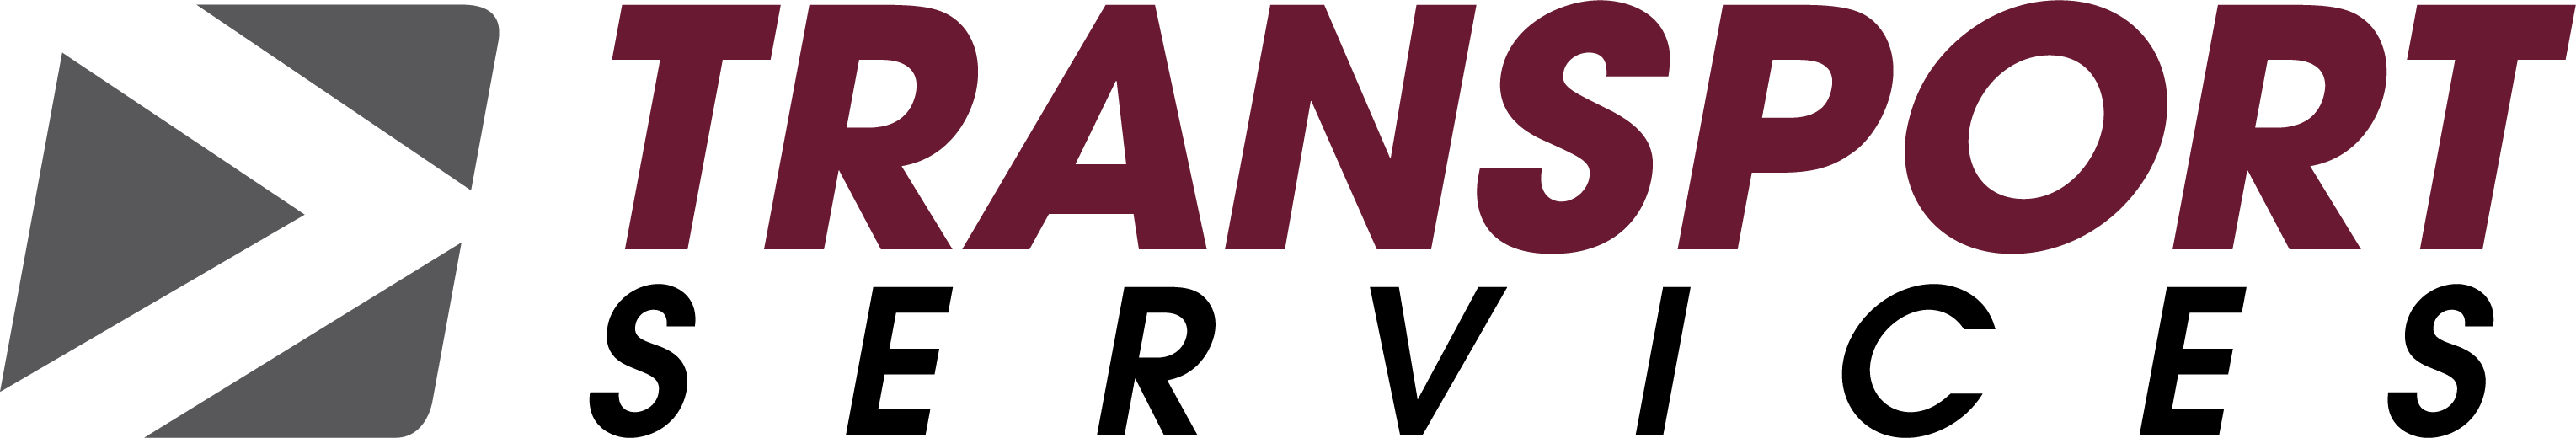 Transport Services Company Logo